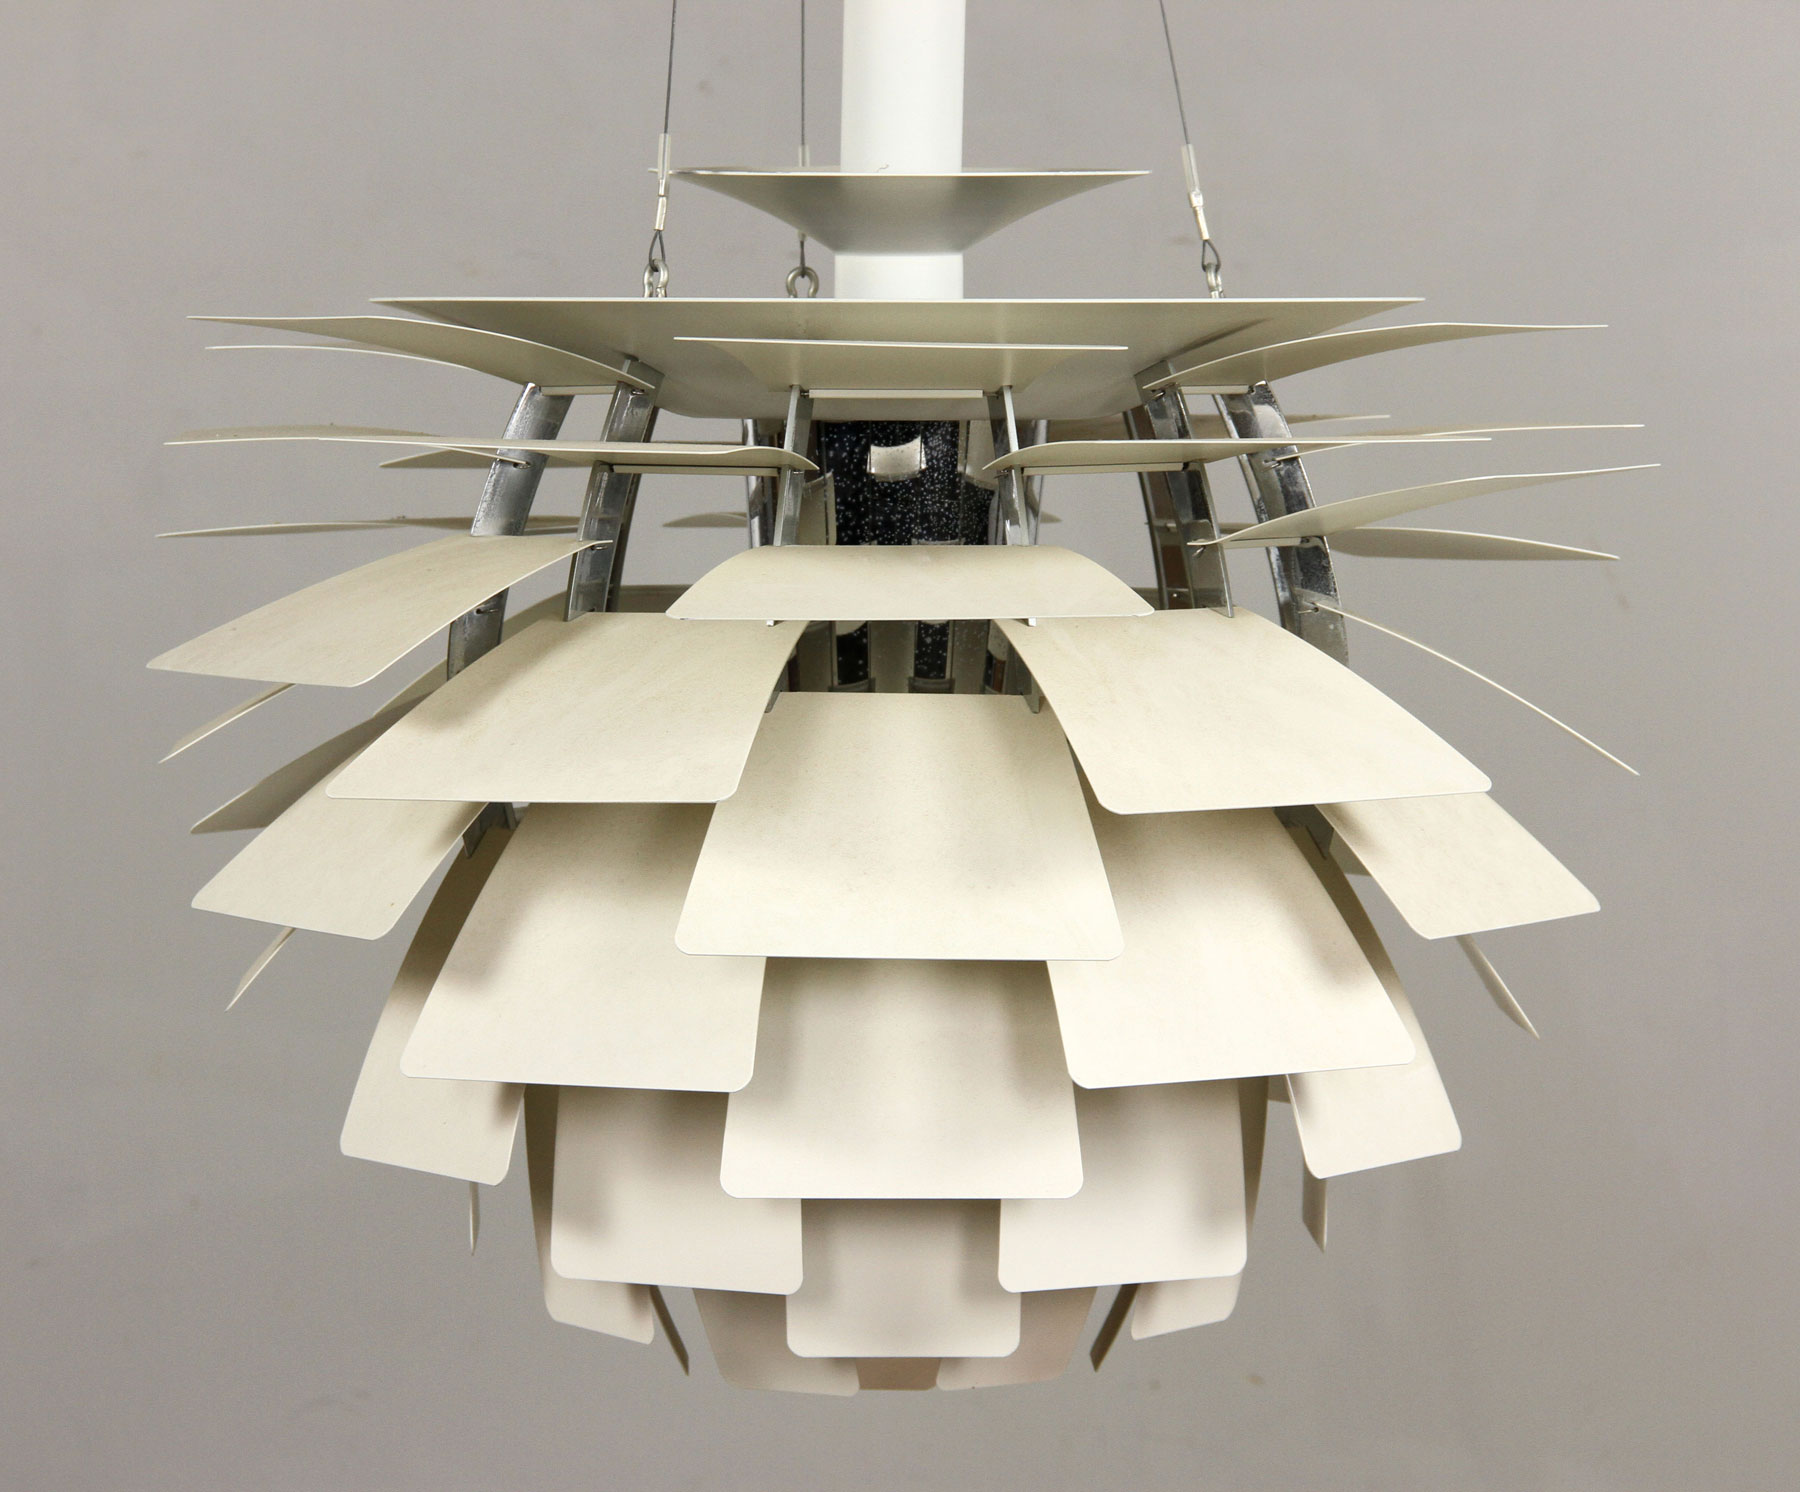 Poul Hennigsen "Artichoke" hanging lamp